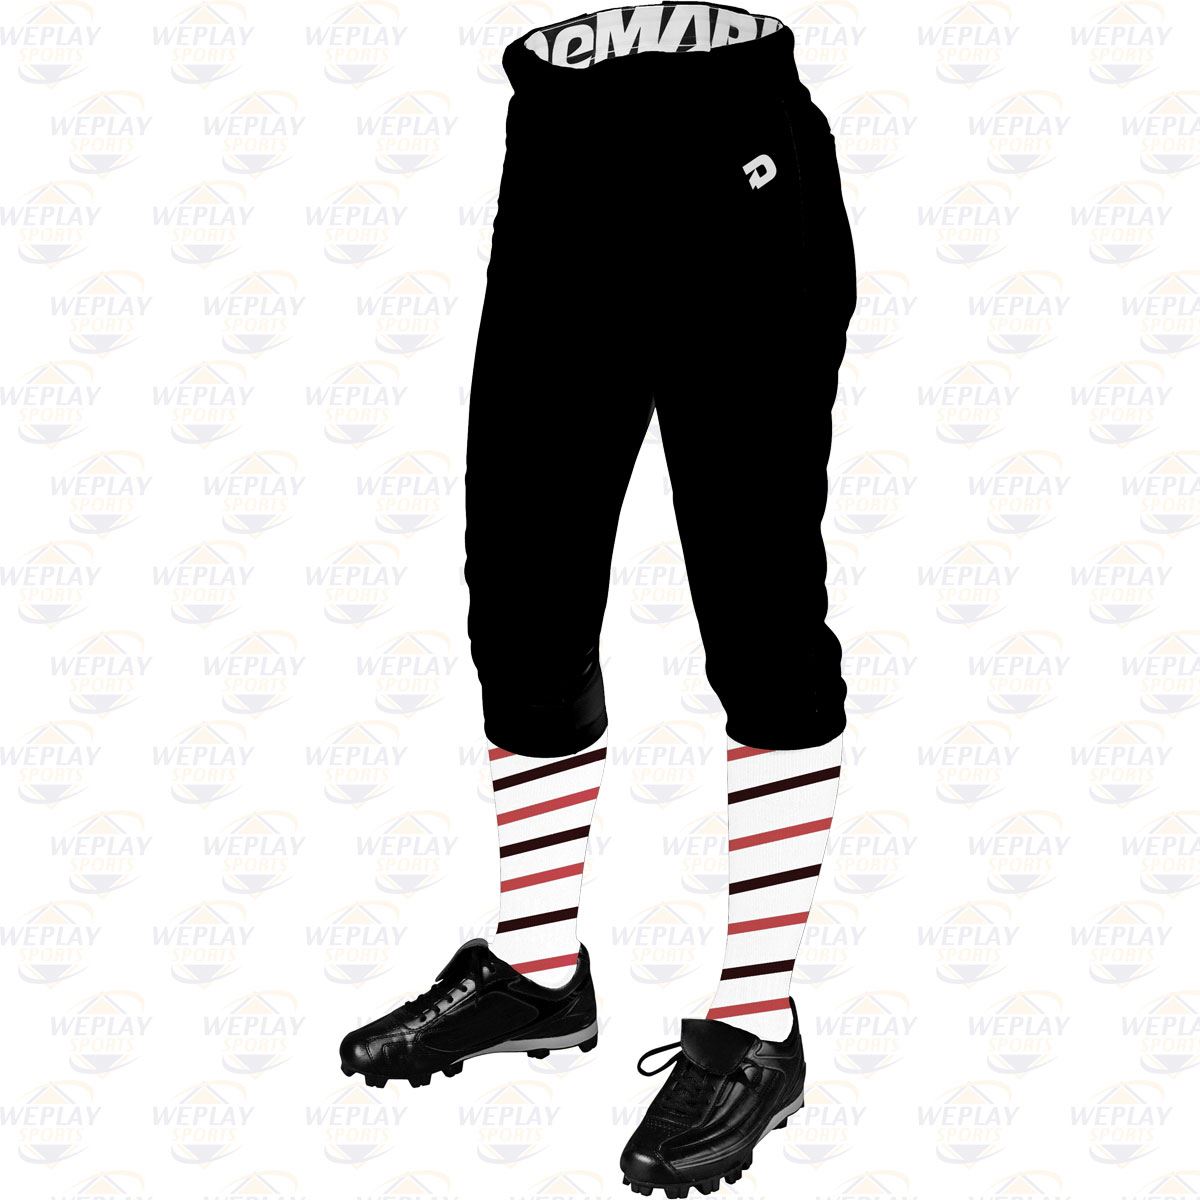 Demarini Fastpitch Softball Pants Womens Teamwear With Belt Loop WTC7605 Wilson 